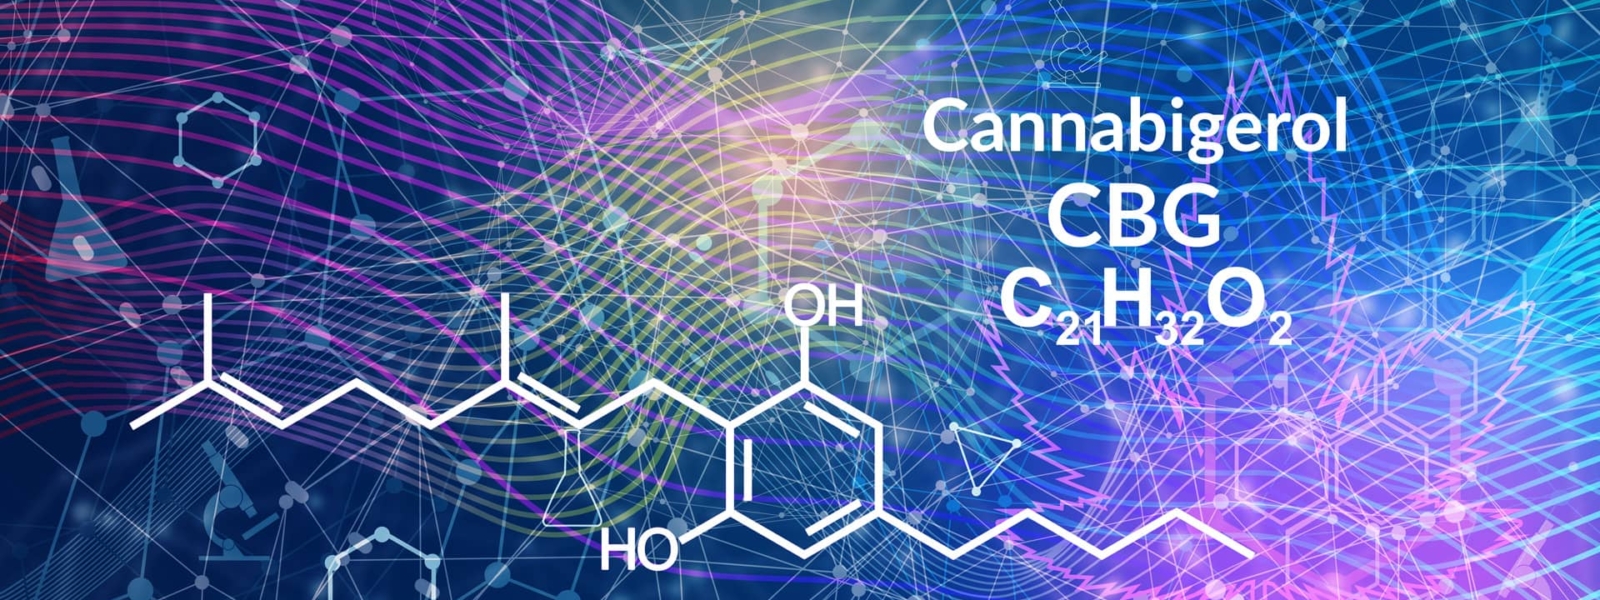 Cannabigerol or CBG molecular structural chemical formula against a futuristic colorful and scientific backdrop.